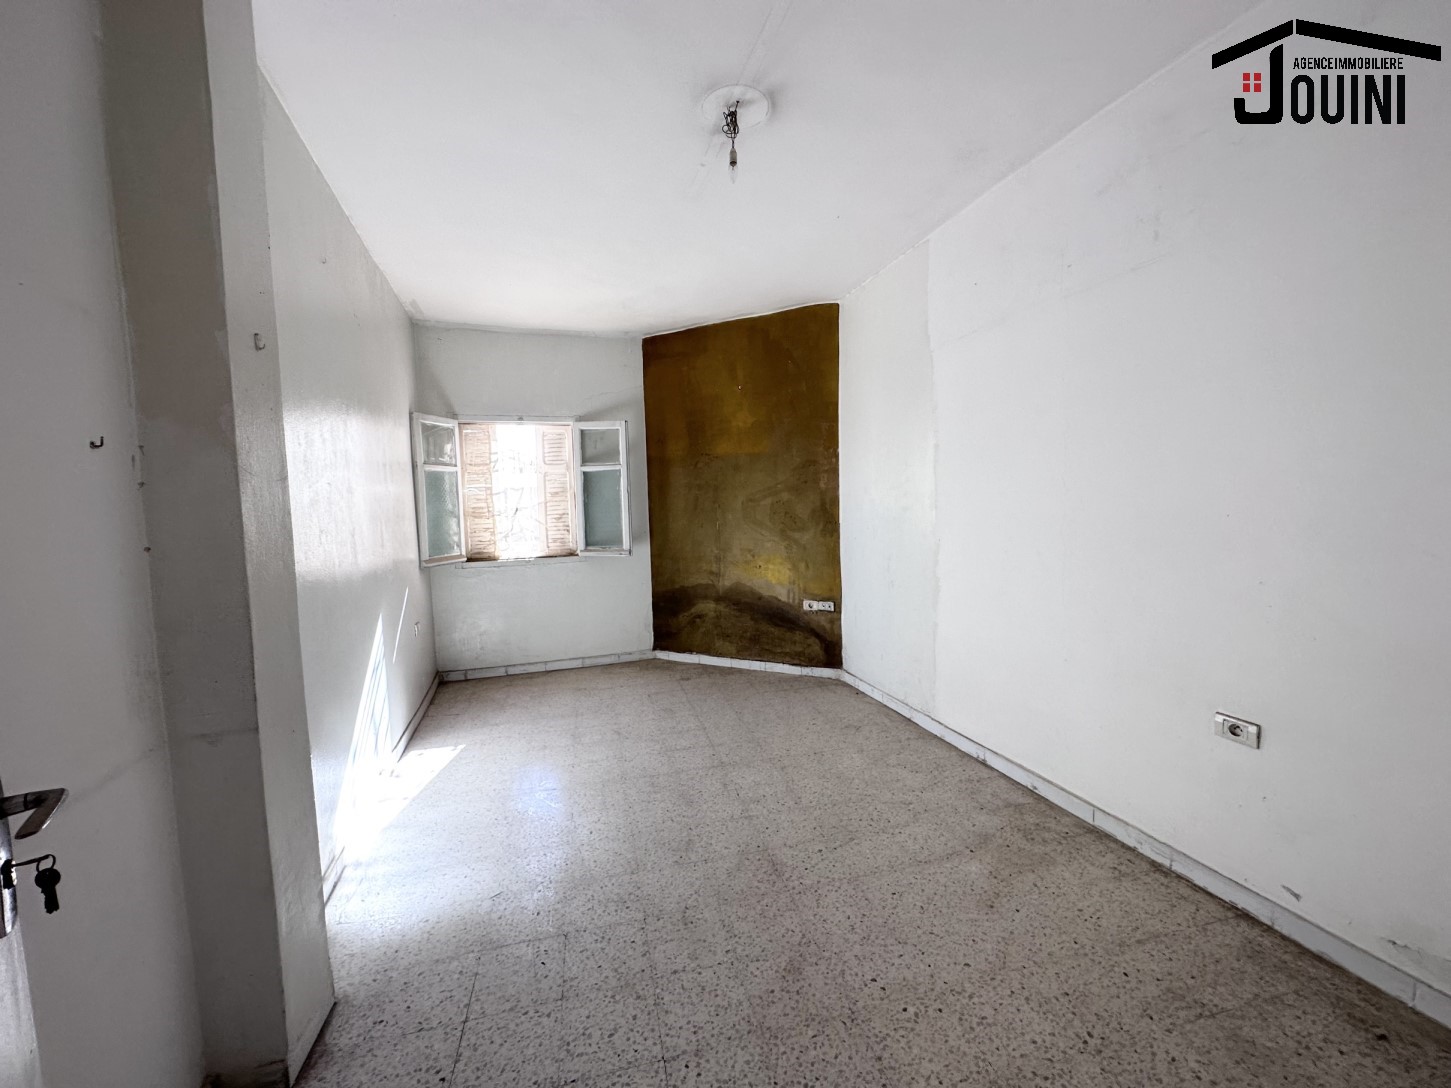 Sidi El Bechir Maakel EzzaM Vente Appart. 3 pices Appartement s2 a maakel ezaim